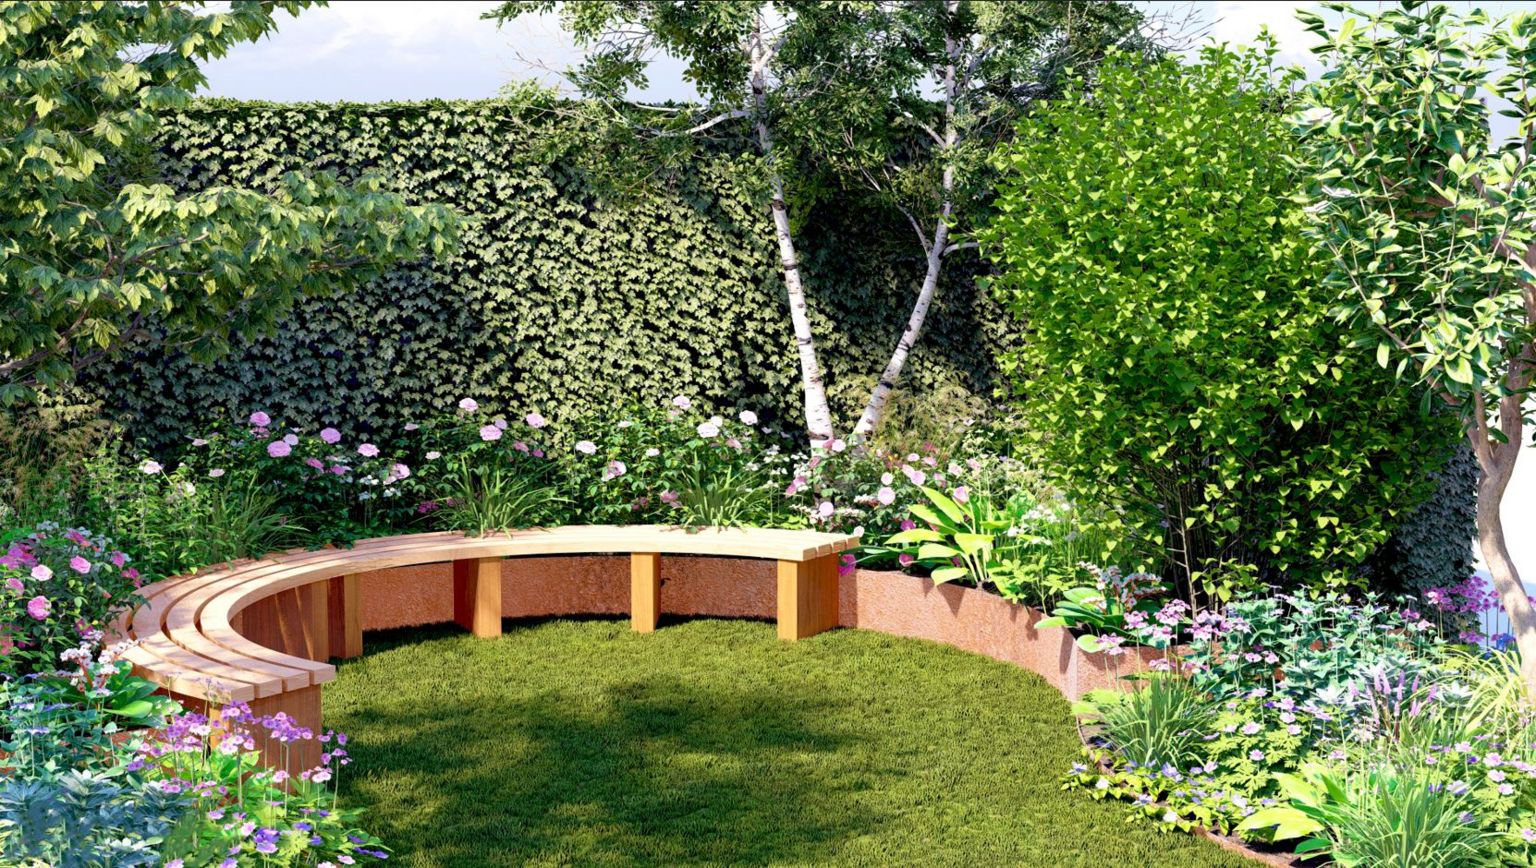 CGI image of the garden